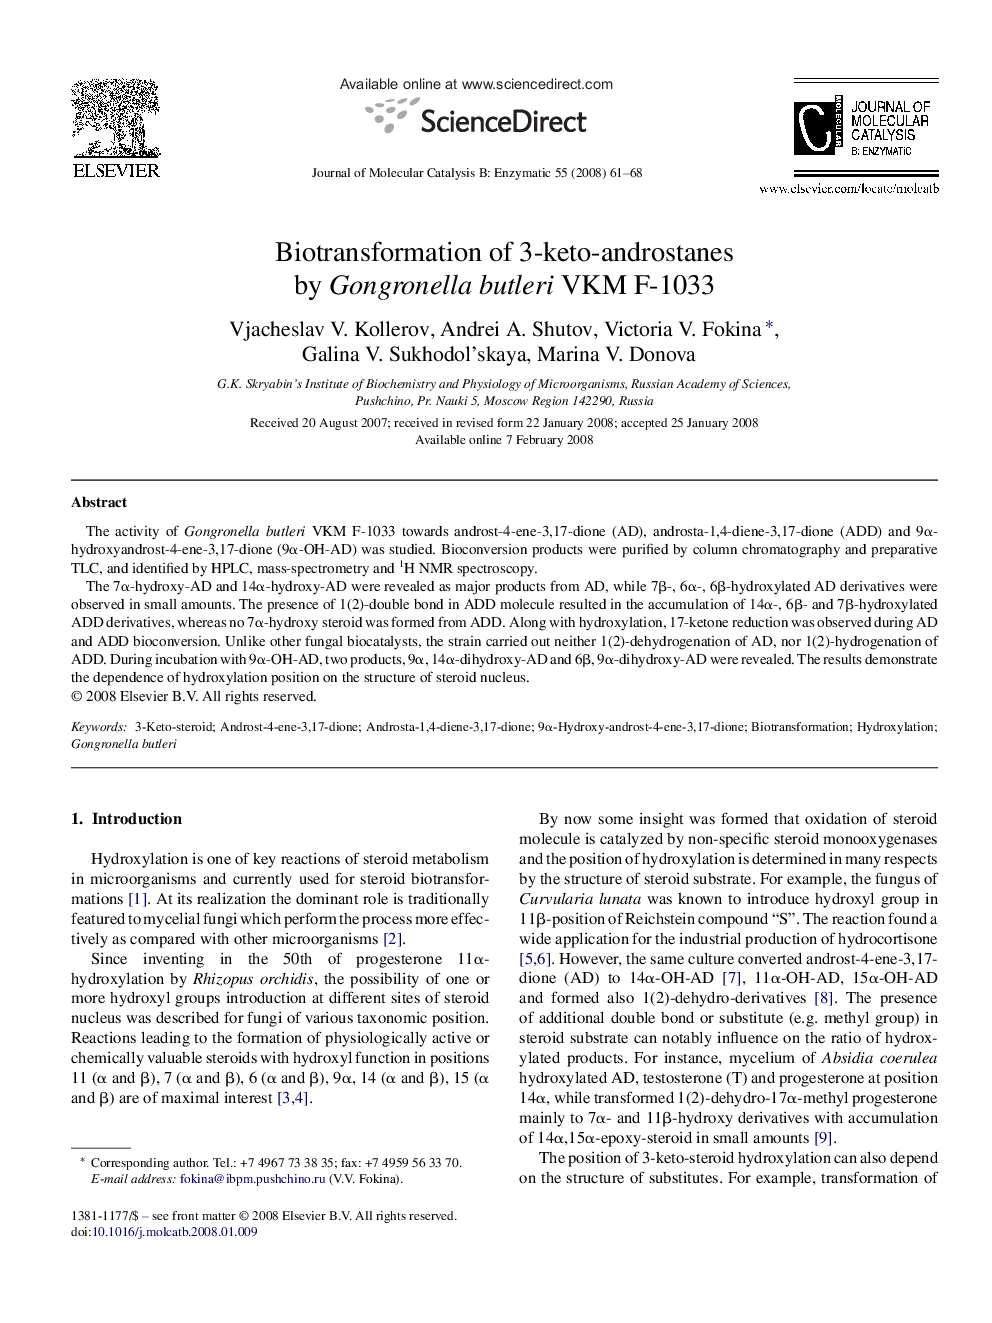 Biotransformation of 3-keto-androstanes by Gongronella butleri VKM F-1033